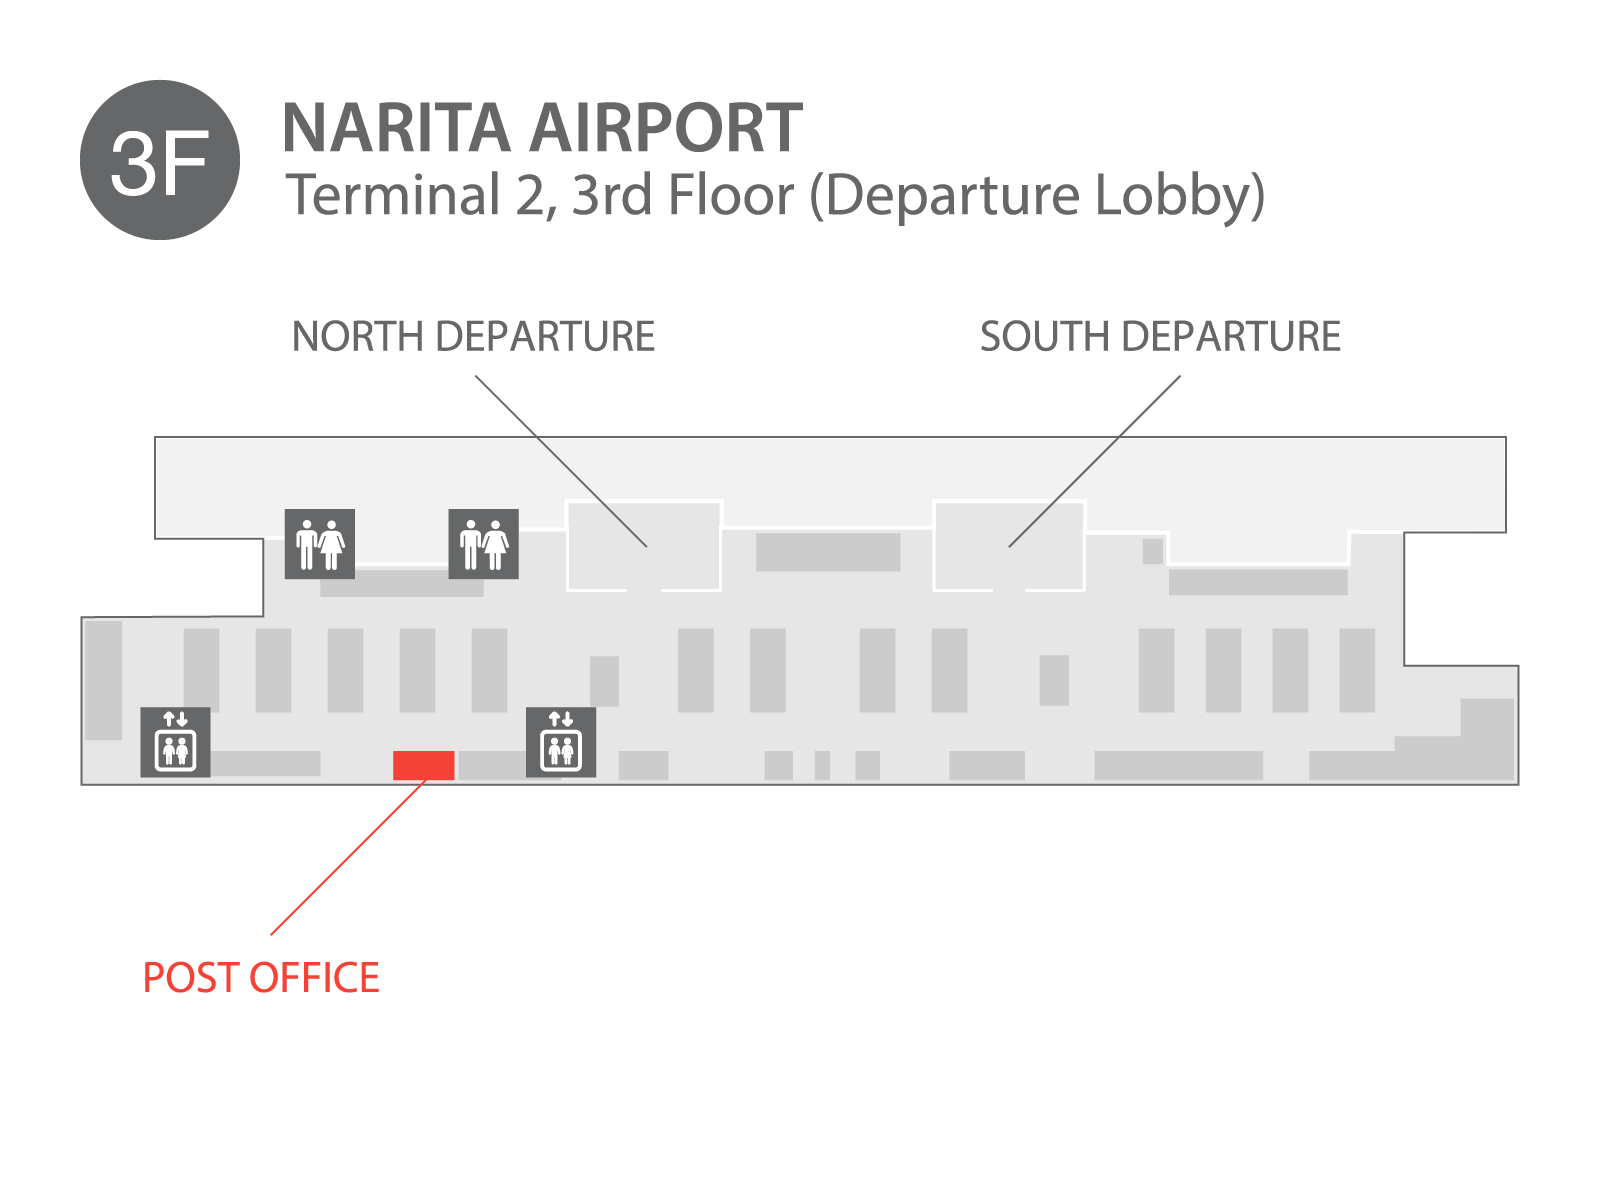 Narita Airport Terminal 2 - Narita airport Terminal 2 located on 3rd floor.